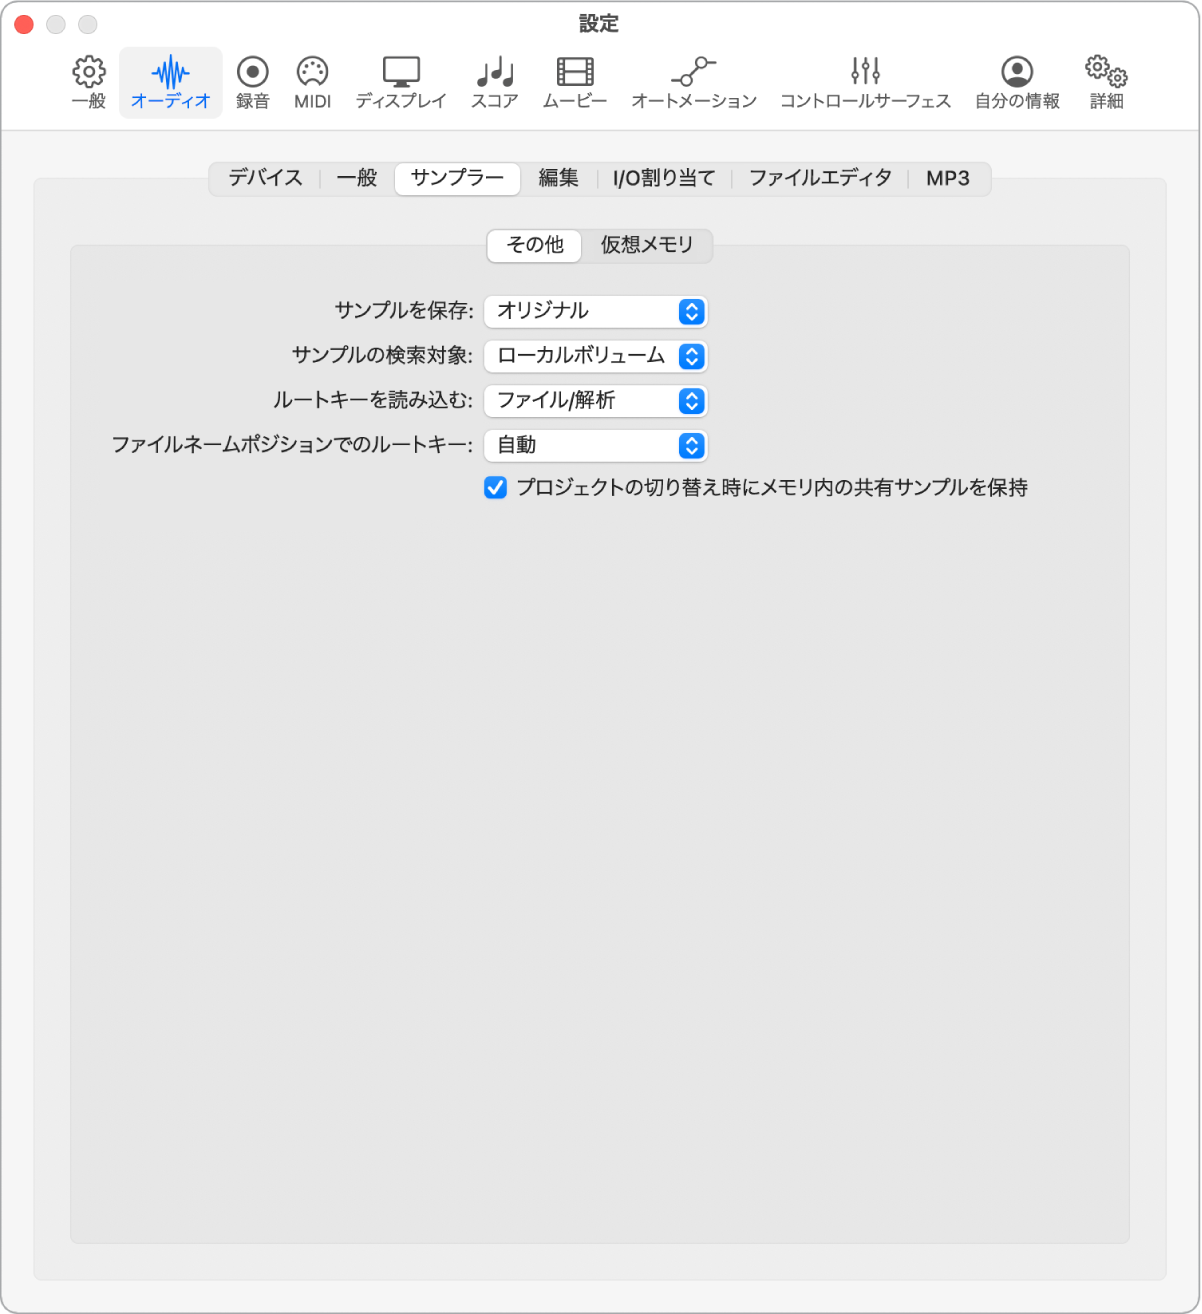 Logic Pro for Macの「サンプラー」設定 - Apple サポート (日本)